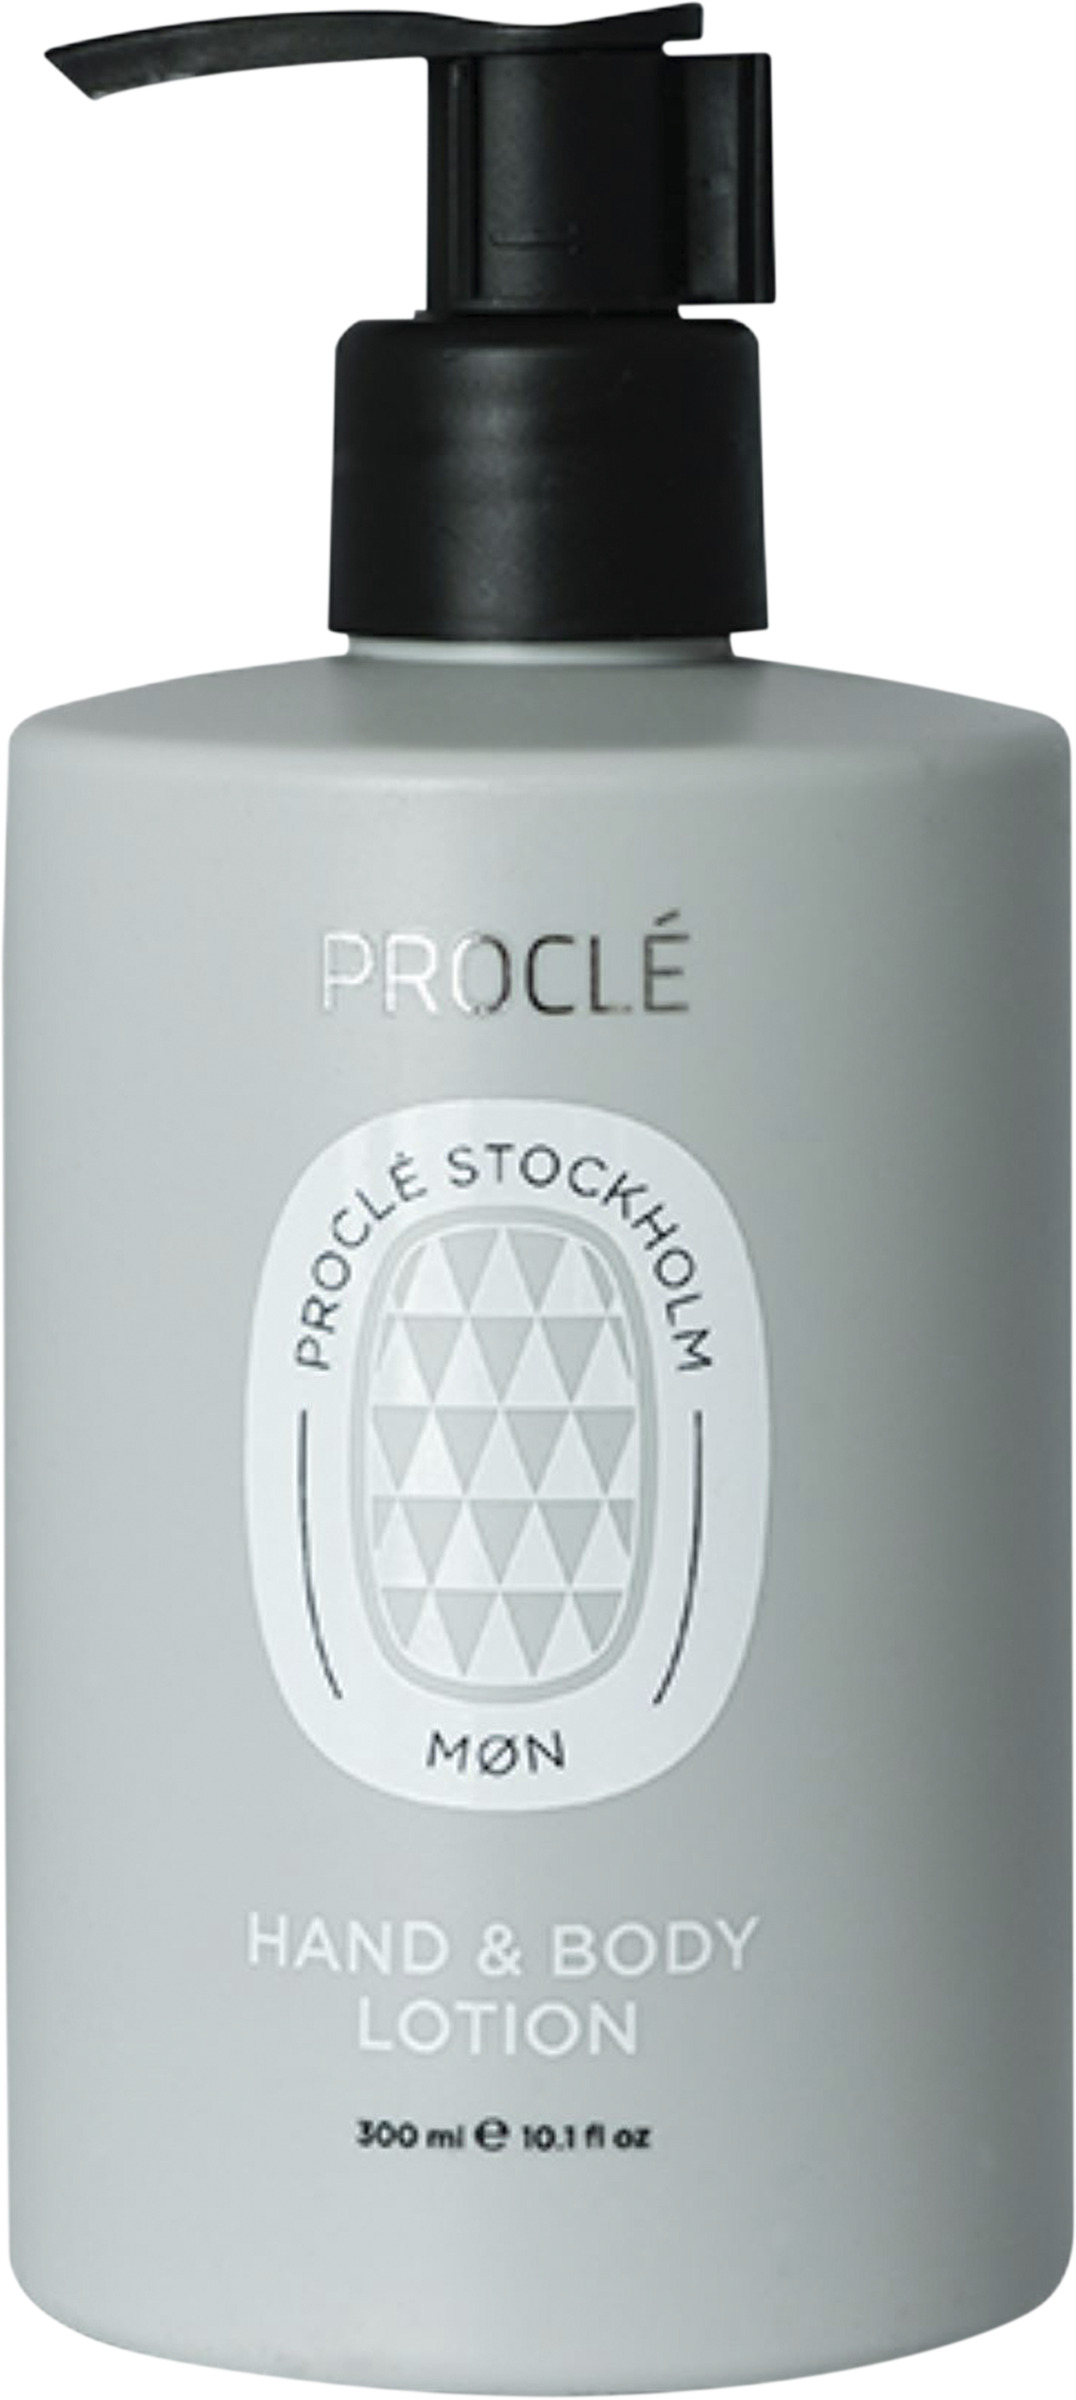 Proclé Stockholm Møn Hand & Body Lotion 300 ml